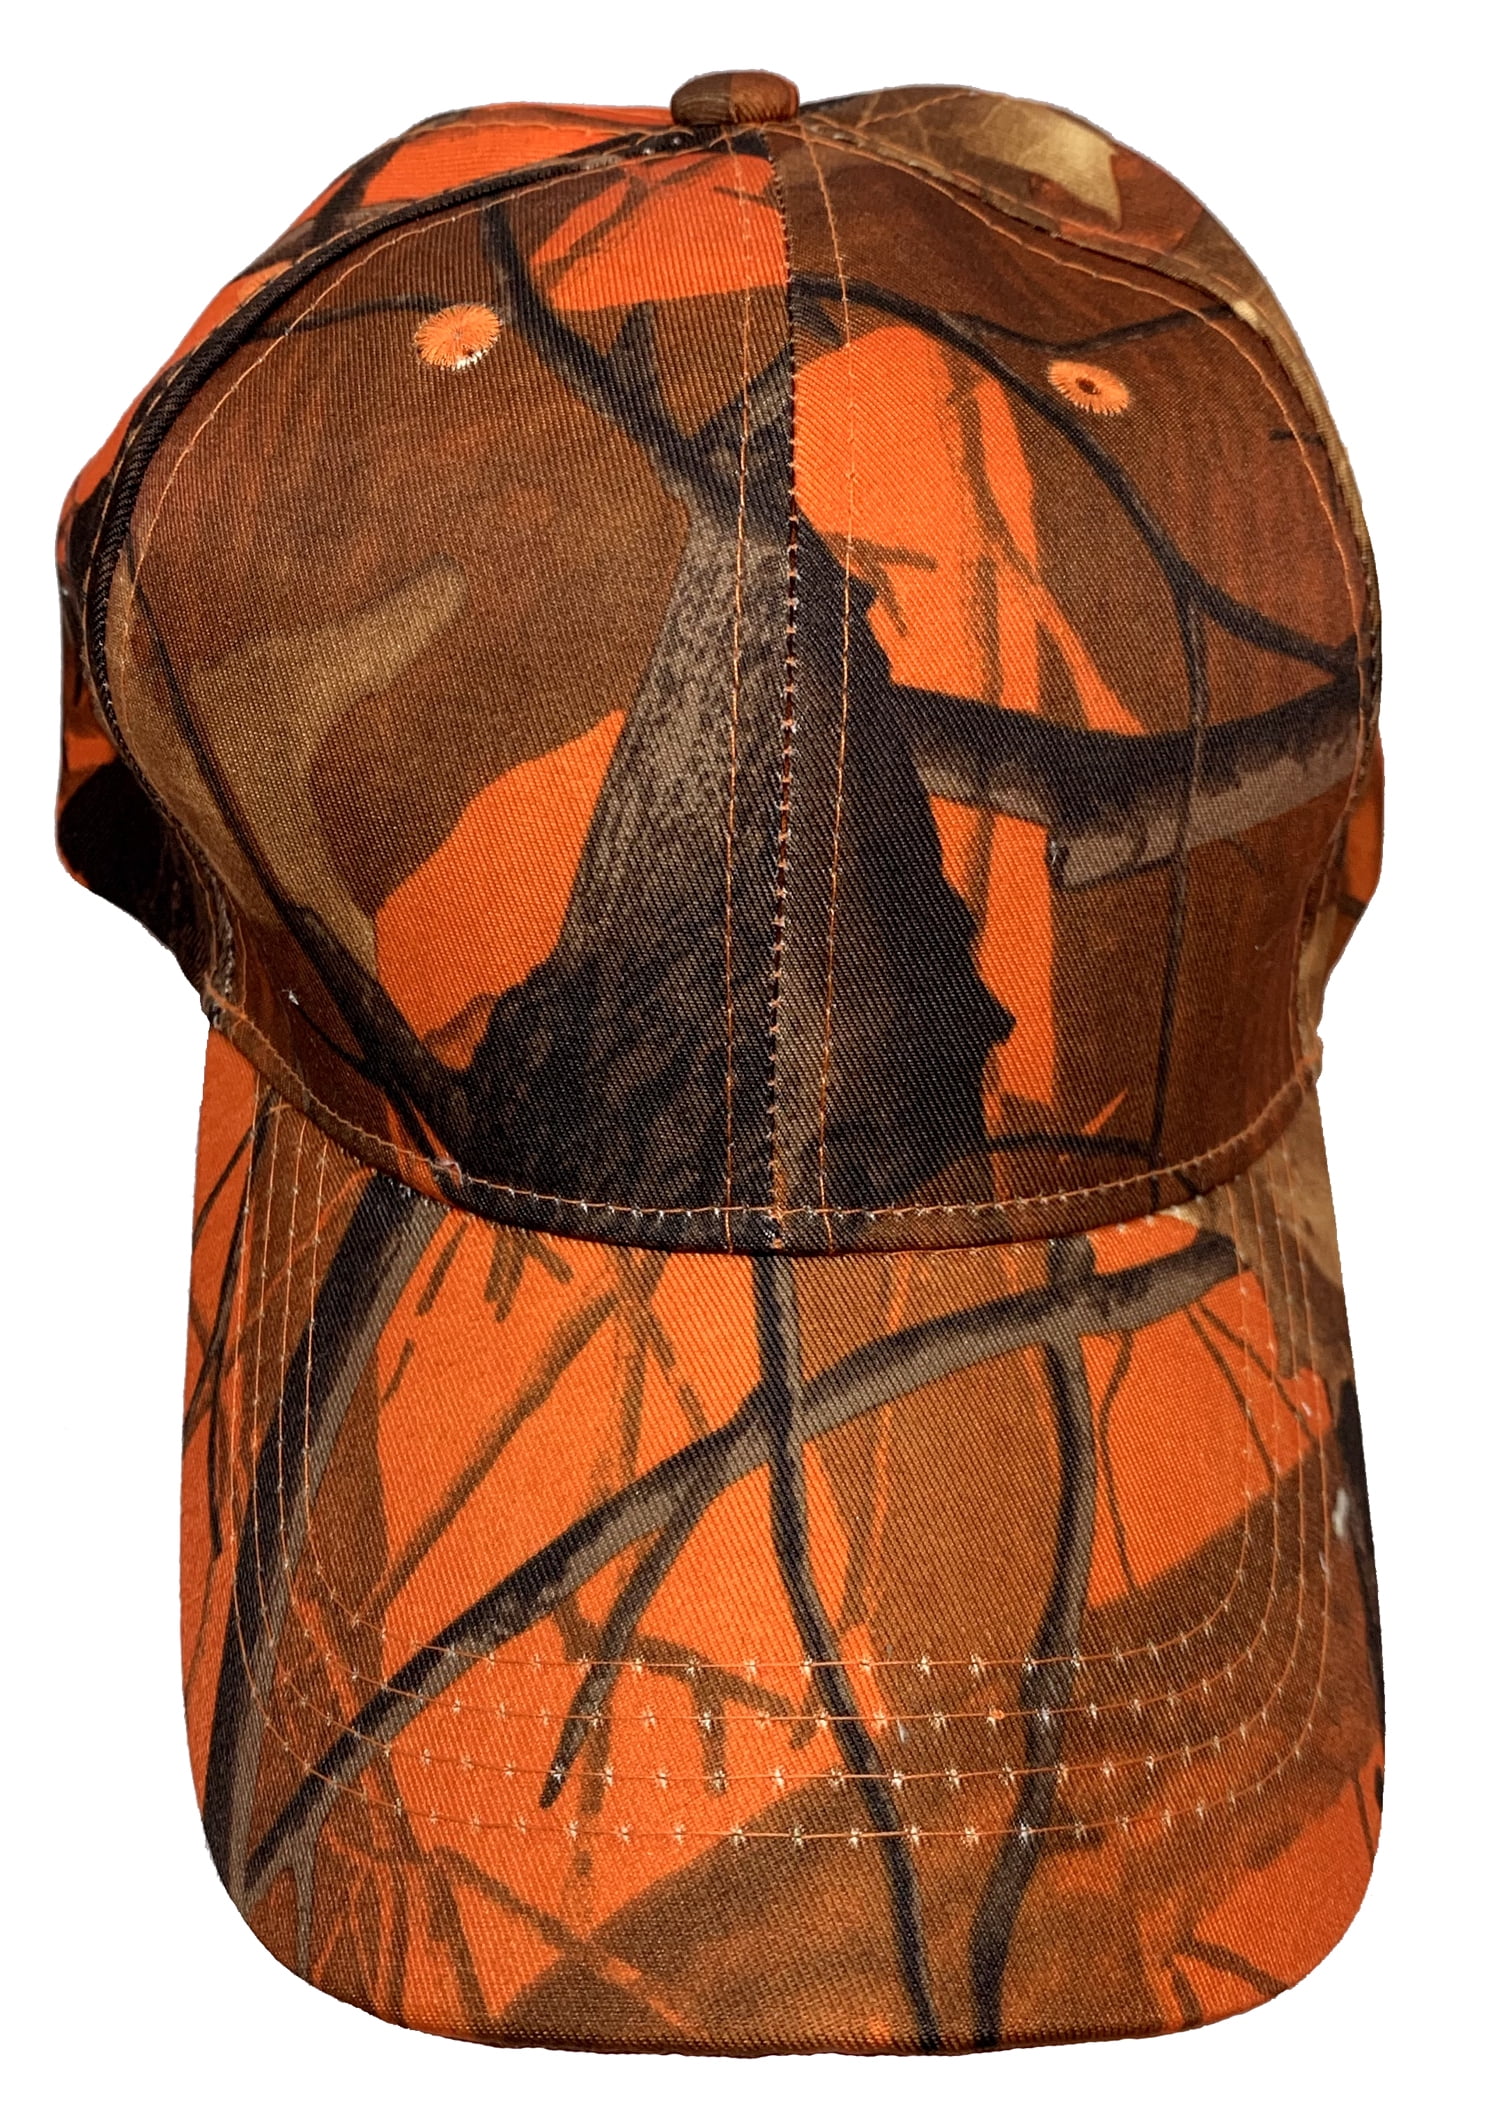 Camouflage Camo Hardwoods RealTree Blaze Orange Hat Cap Hunting Fishing 